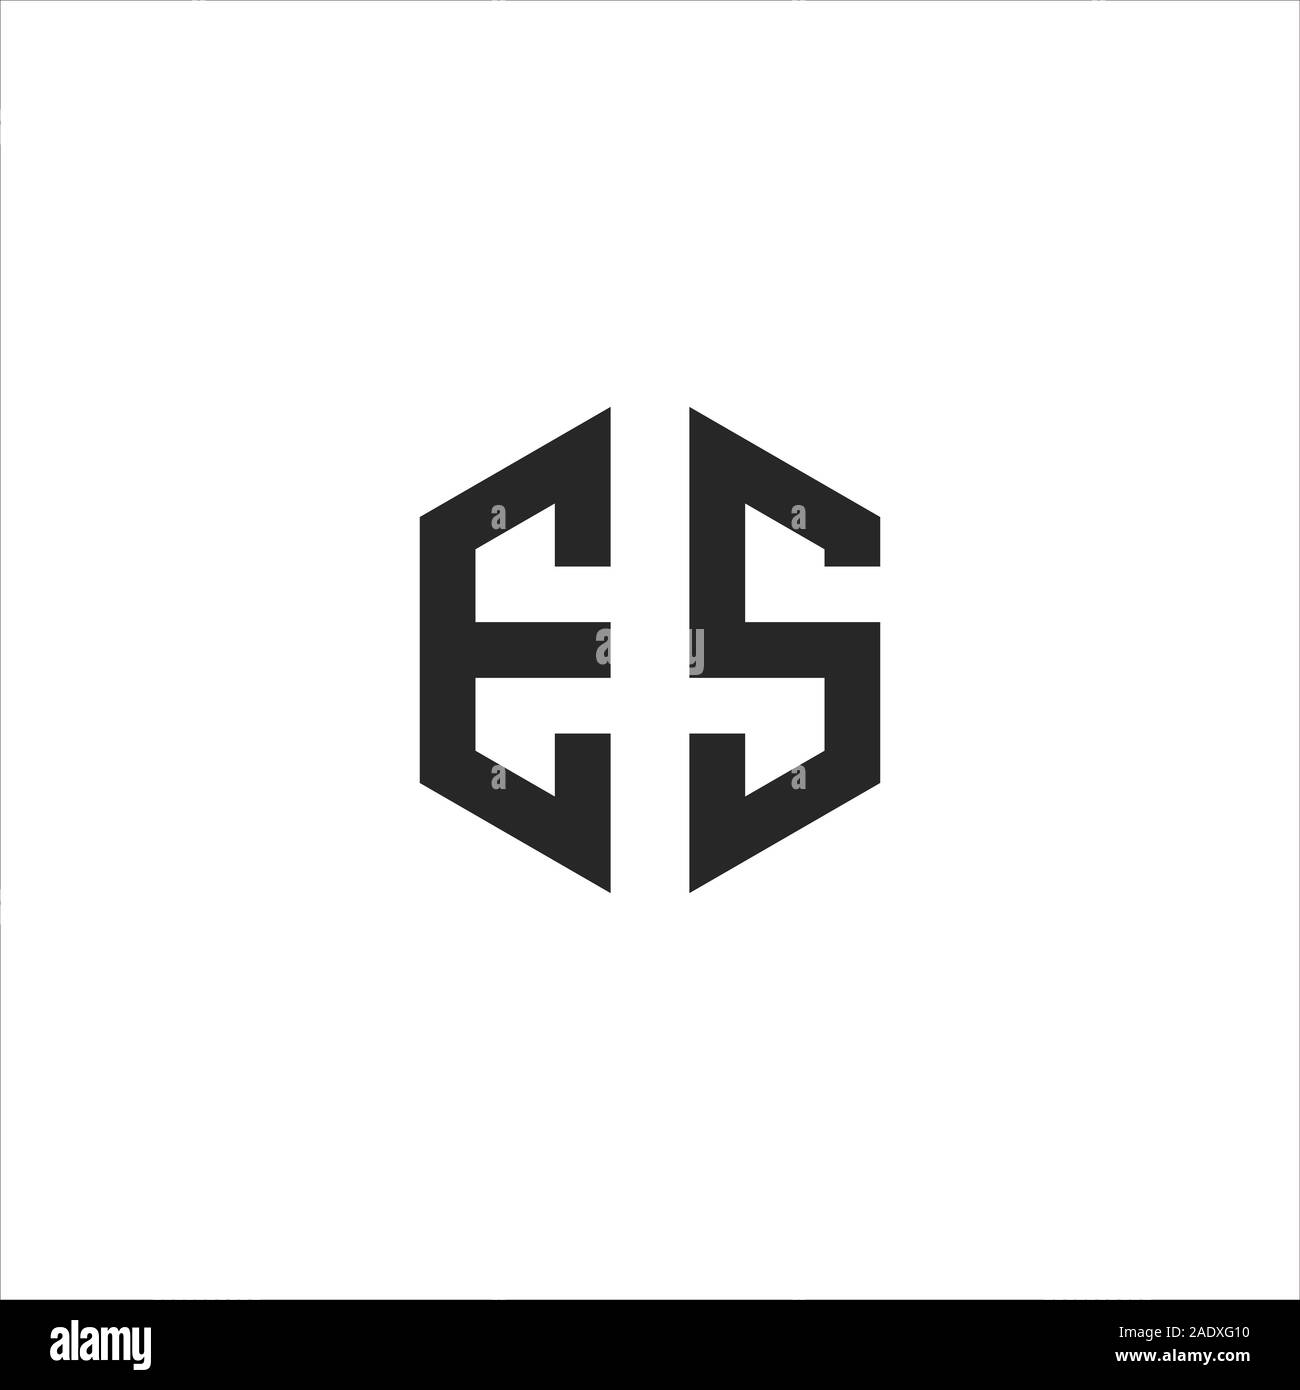 initial letter es or se logo vector logo design Stock Vector